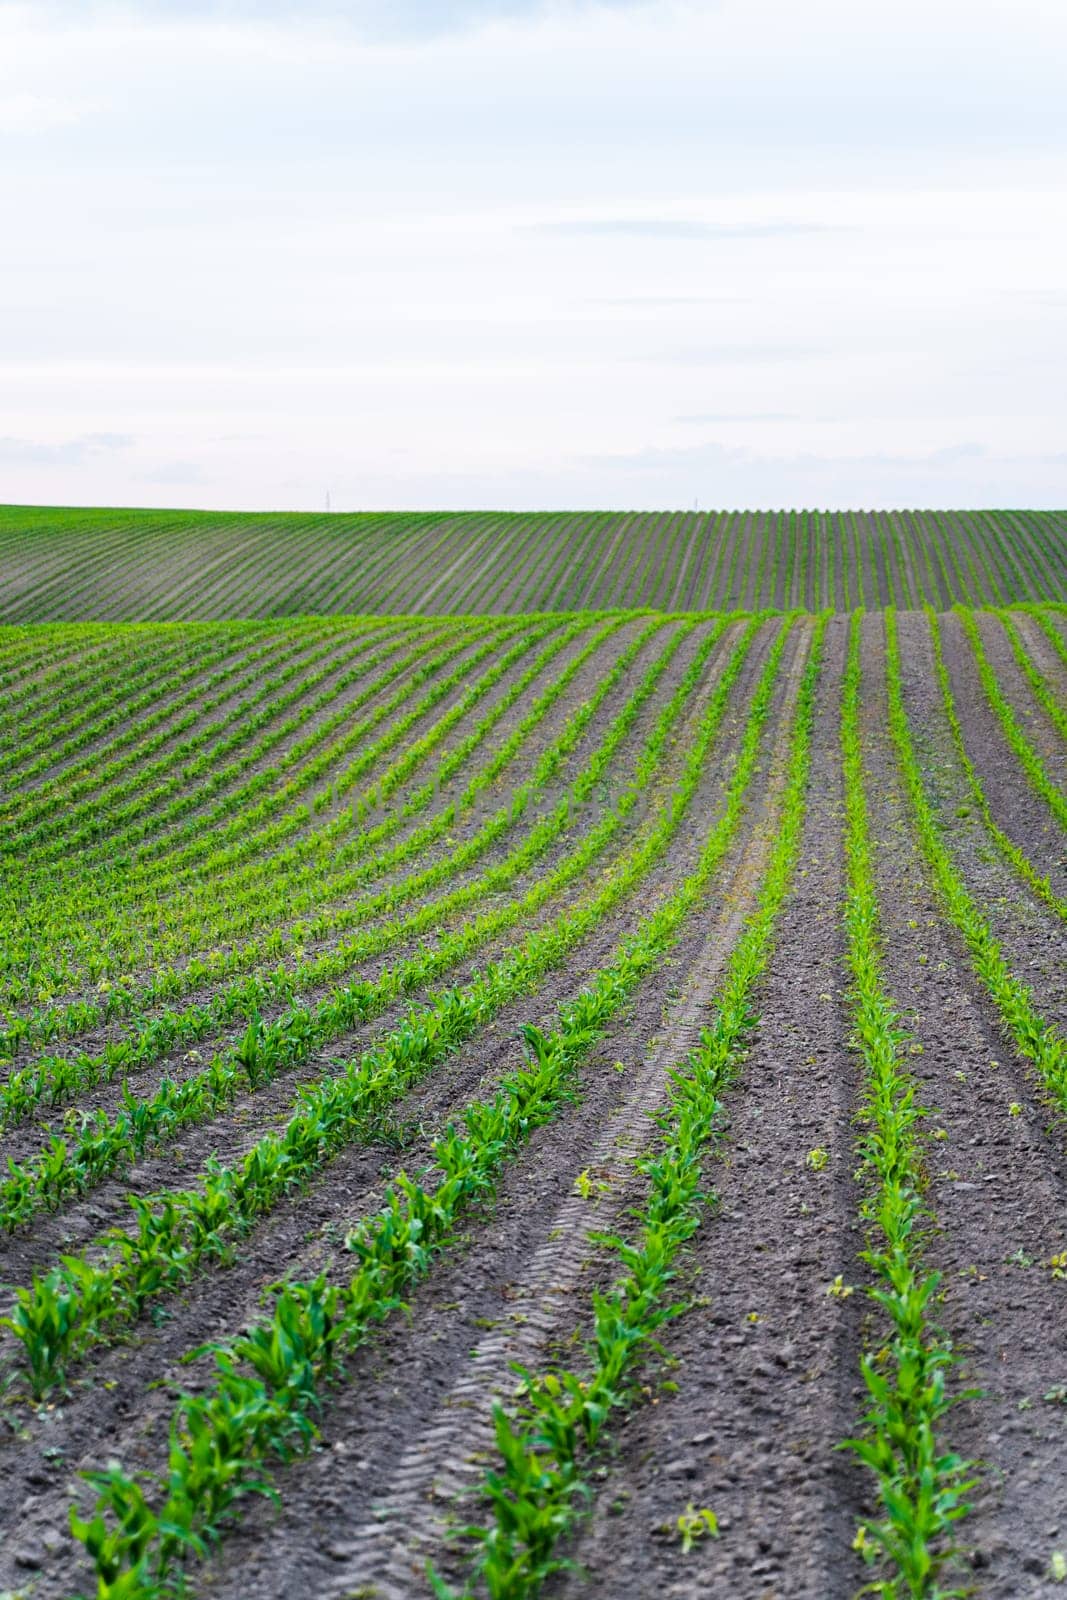 Rows of corn sprouts in a fertile soil on a farm field. Growing corn's sprouts in soil. by vovsht